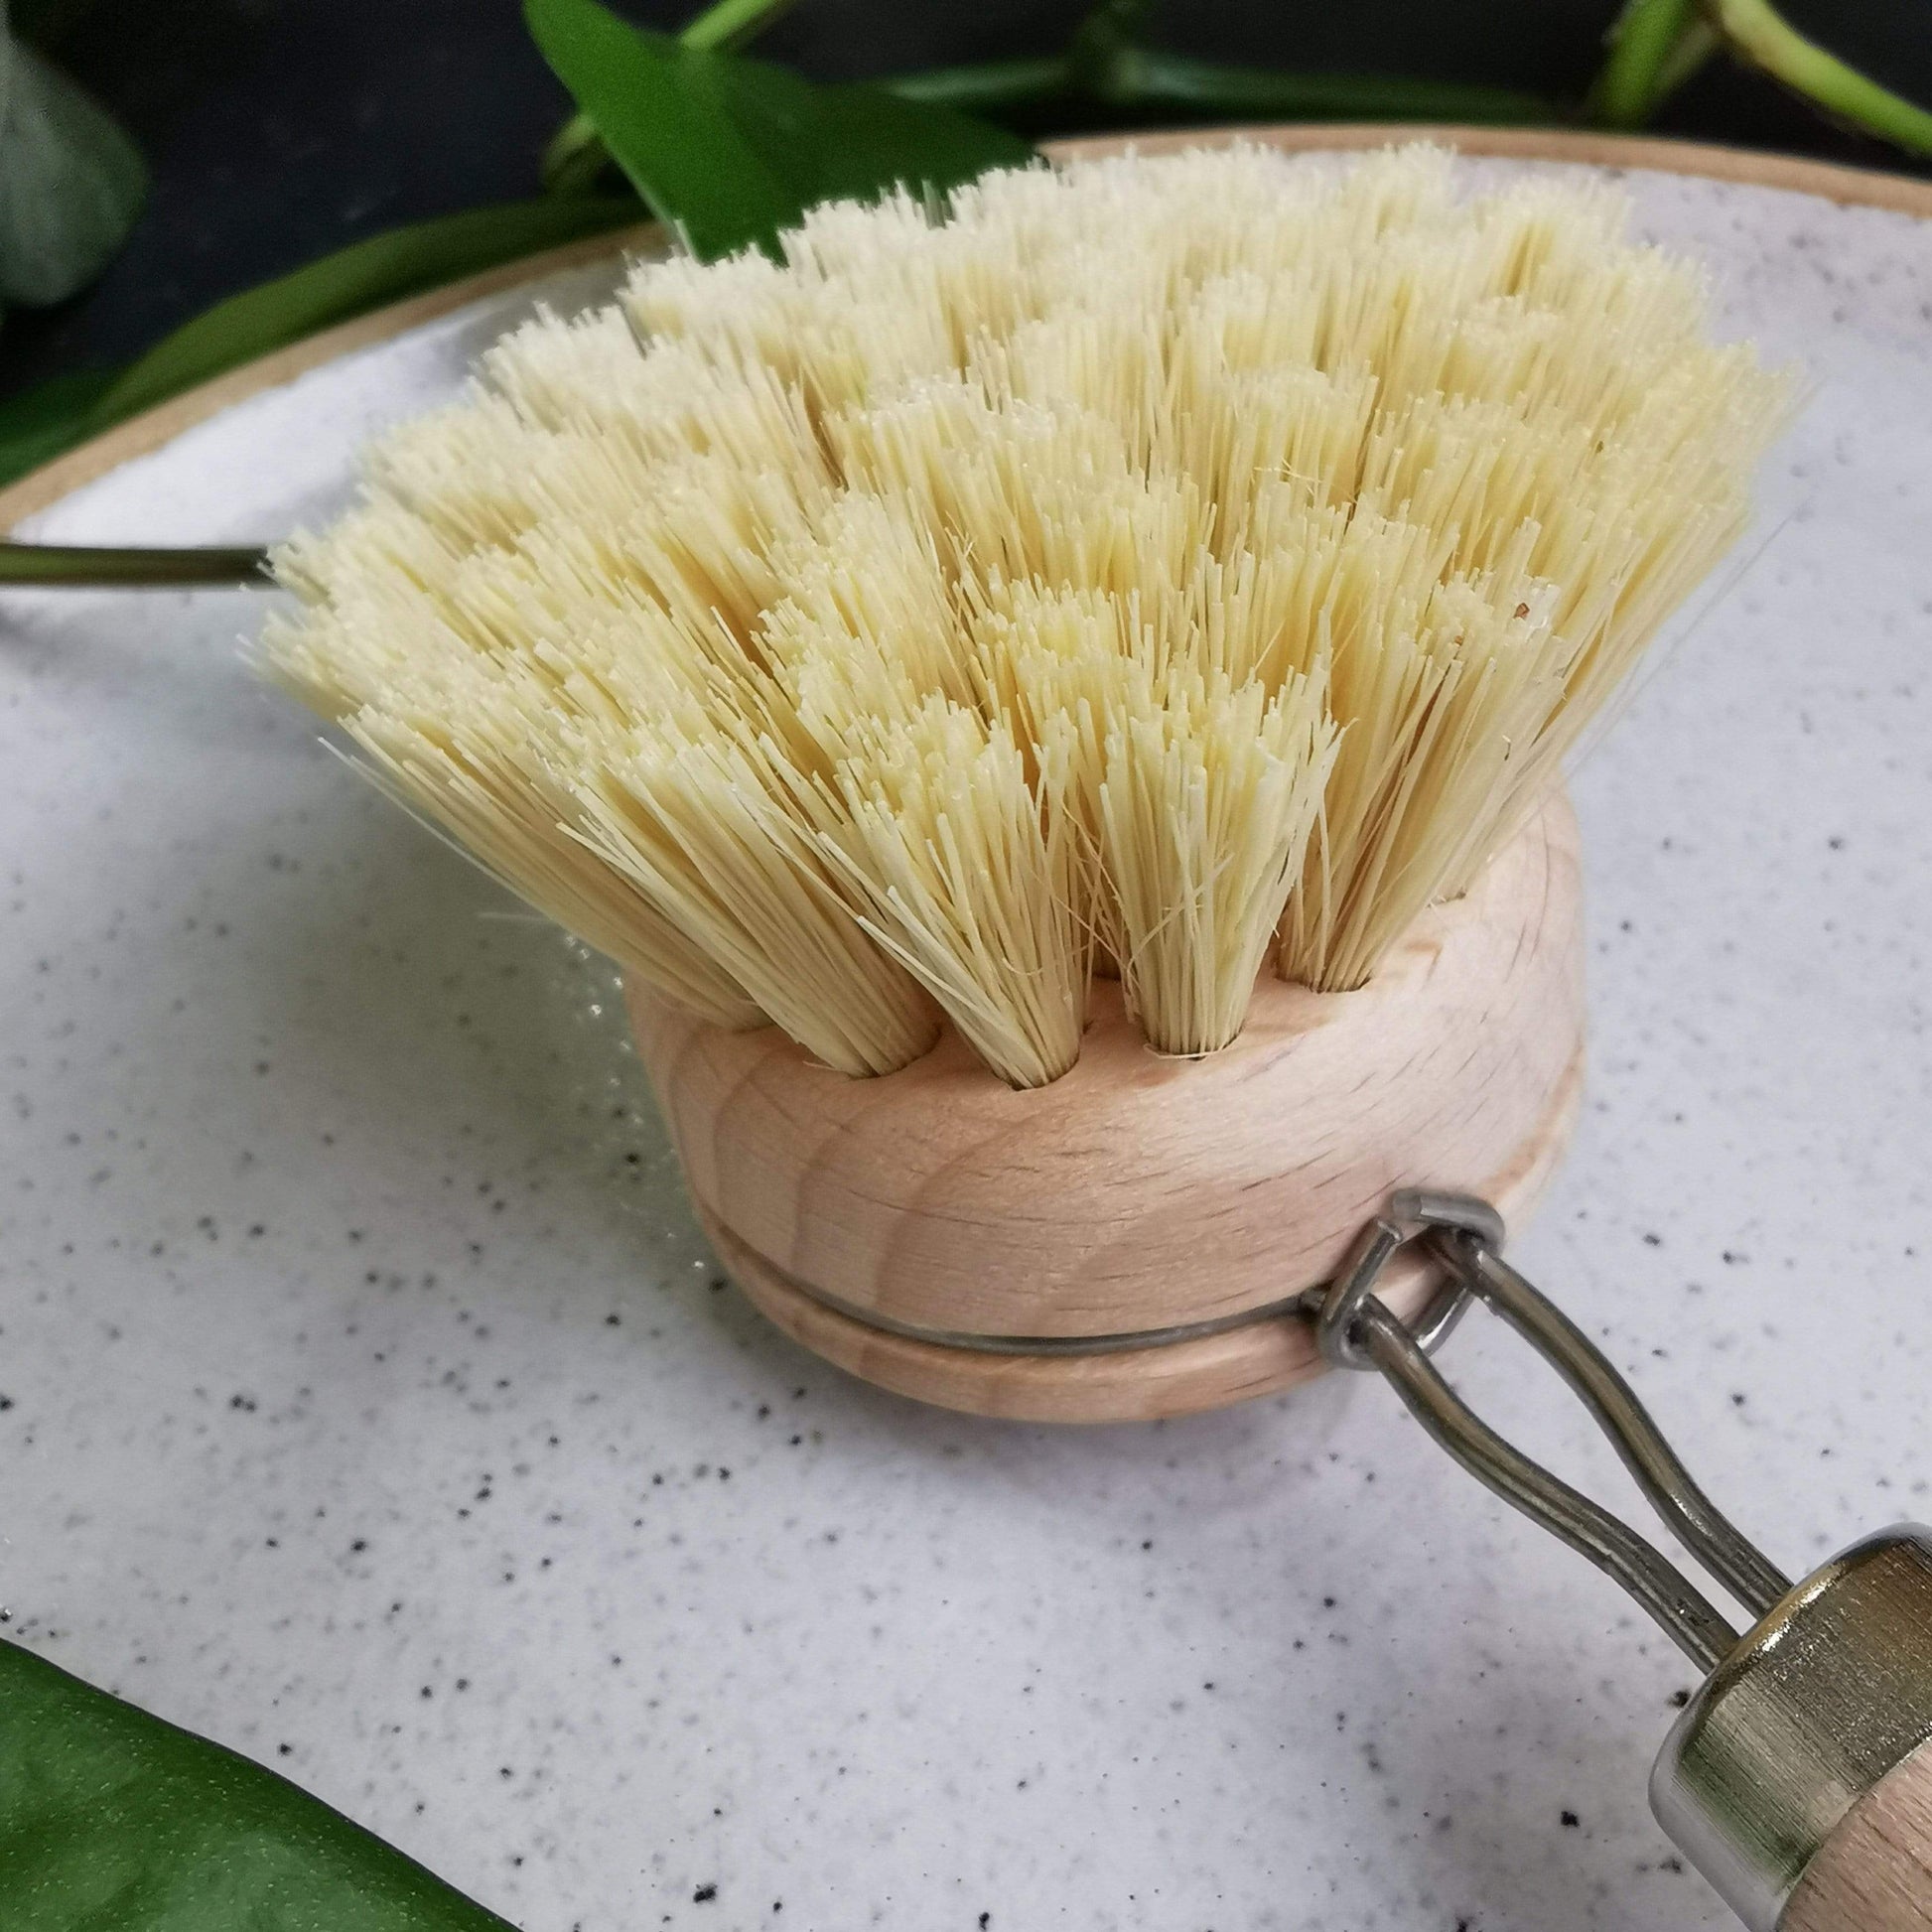 Ecovibe Eco Brush Long Handle Eco Bamboo Dish Brush - Replacement Head